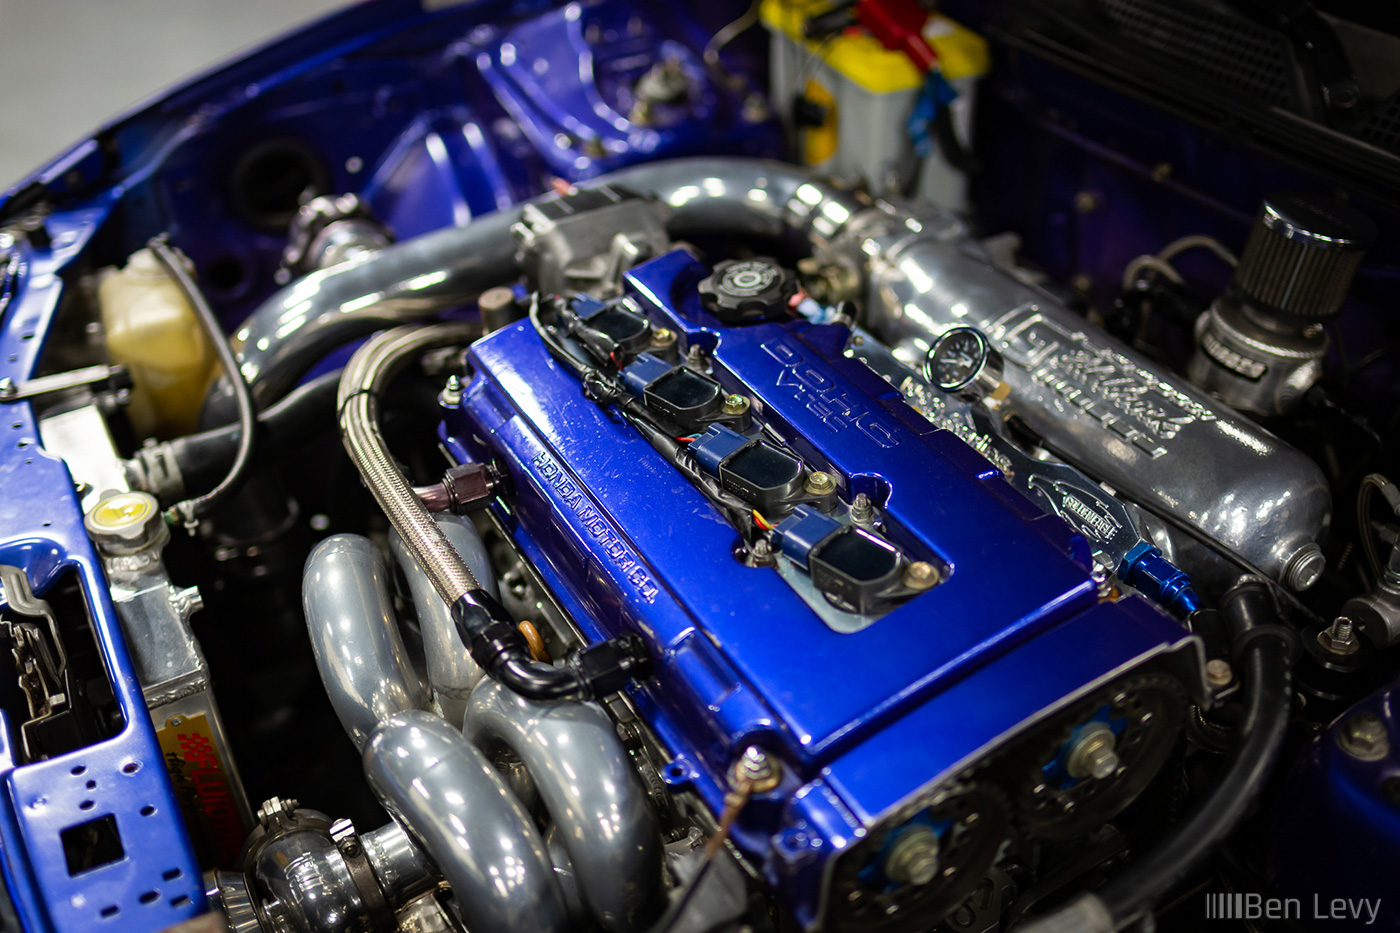 Turbo B18 Honda Engine in Integra